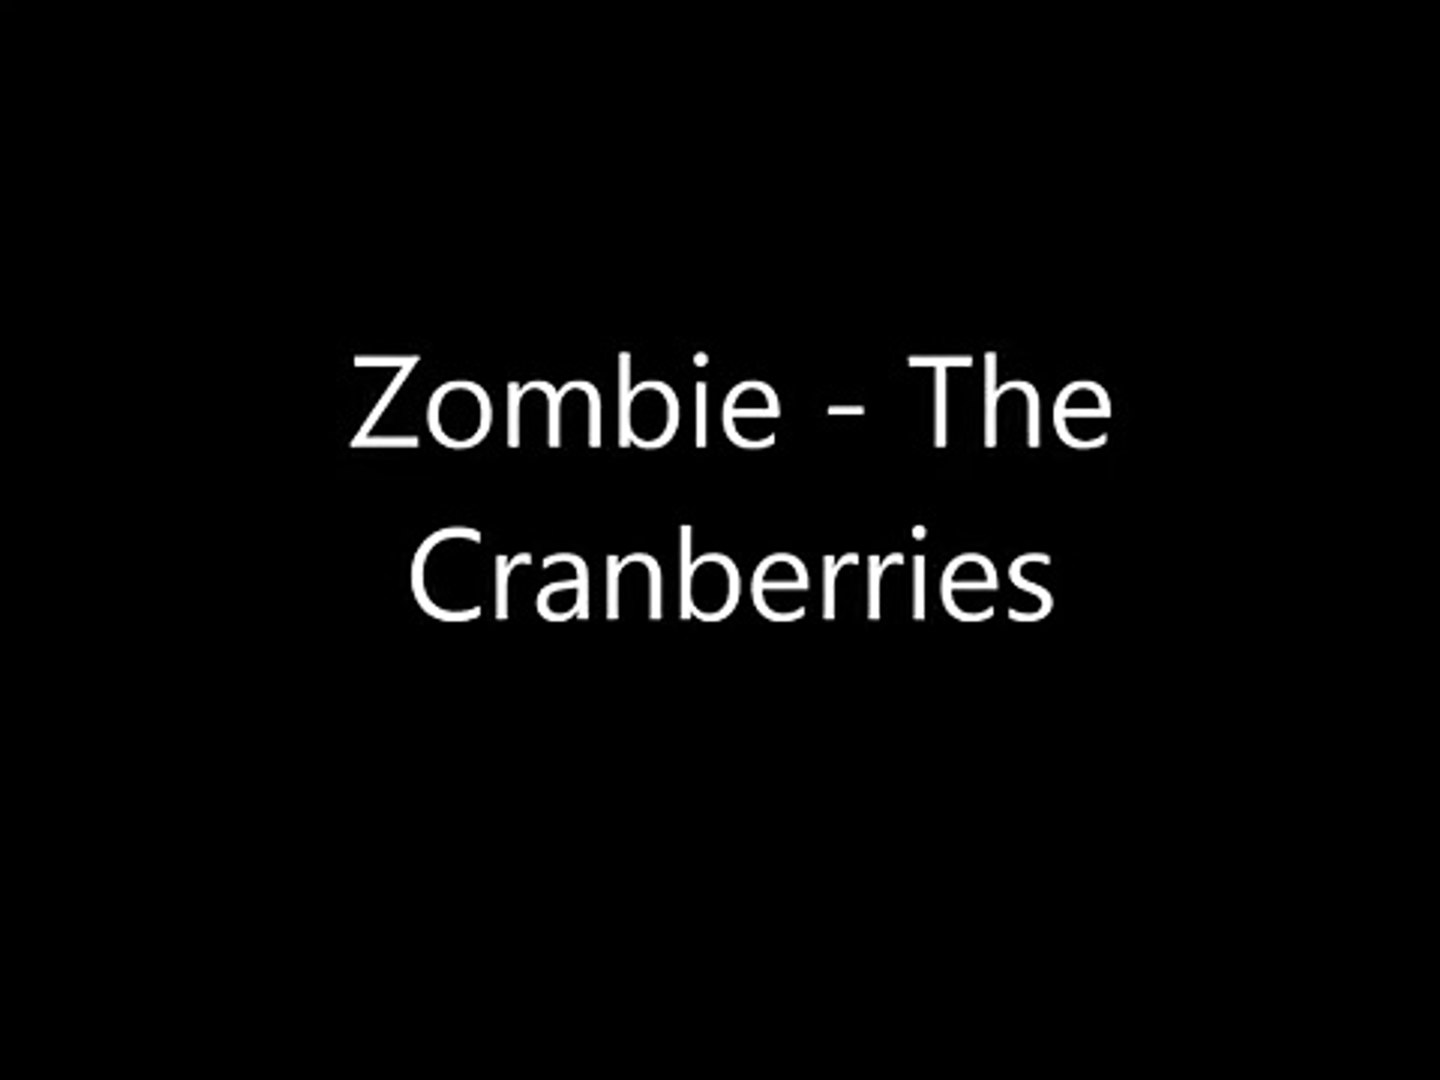 The Cranberries - Zombie (Lyric Video) 